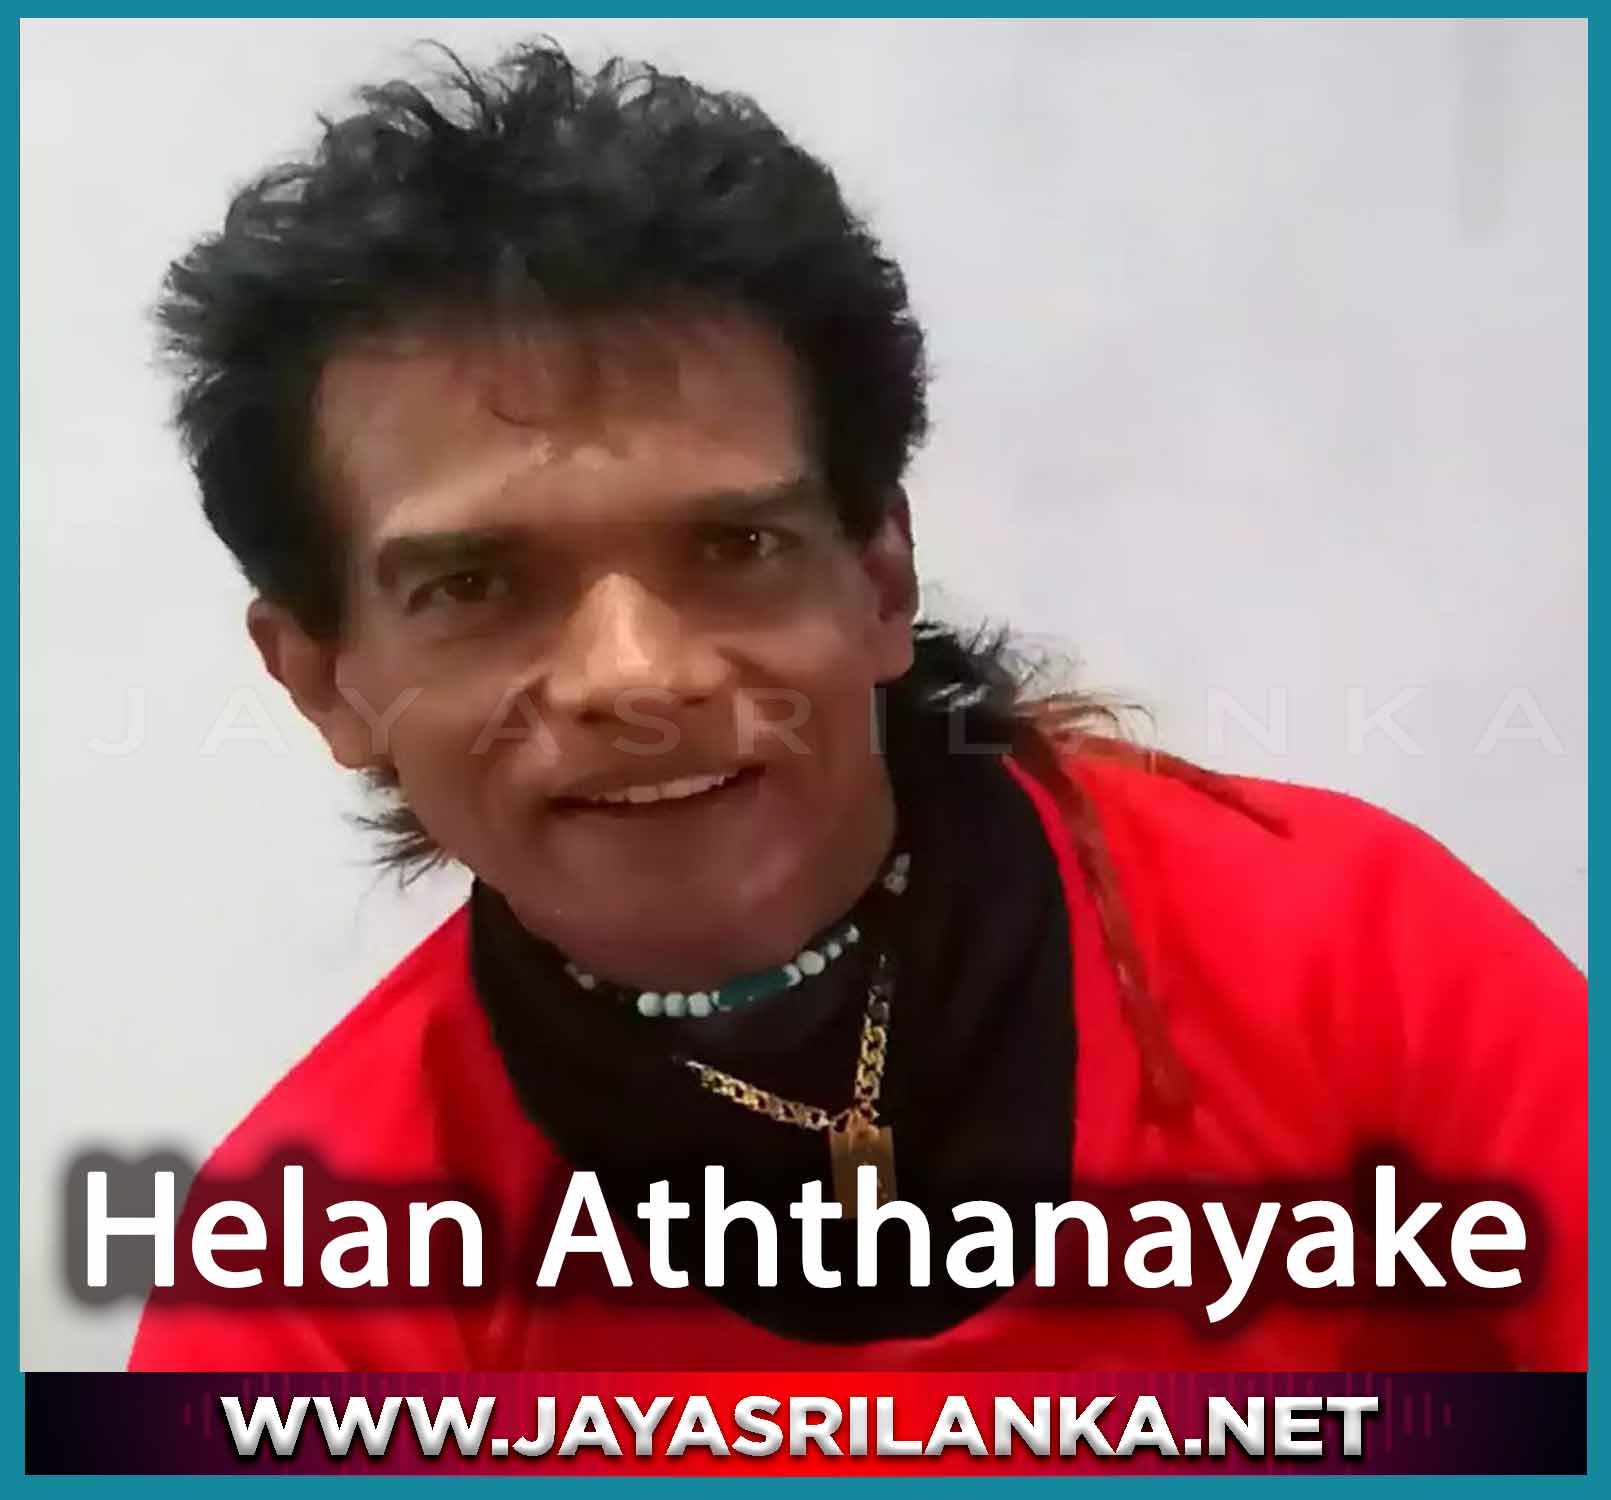 Ma Tharaha Nathe Lande - Helan Aththanayaka mp3 Image